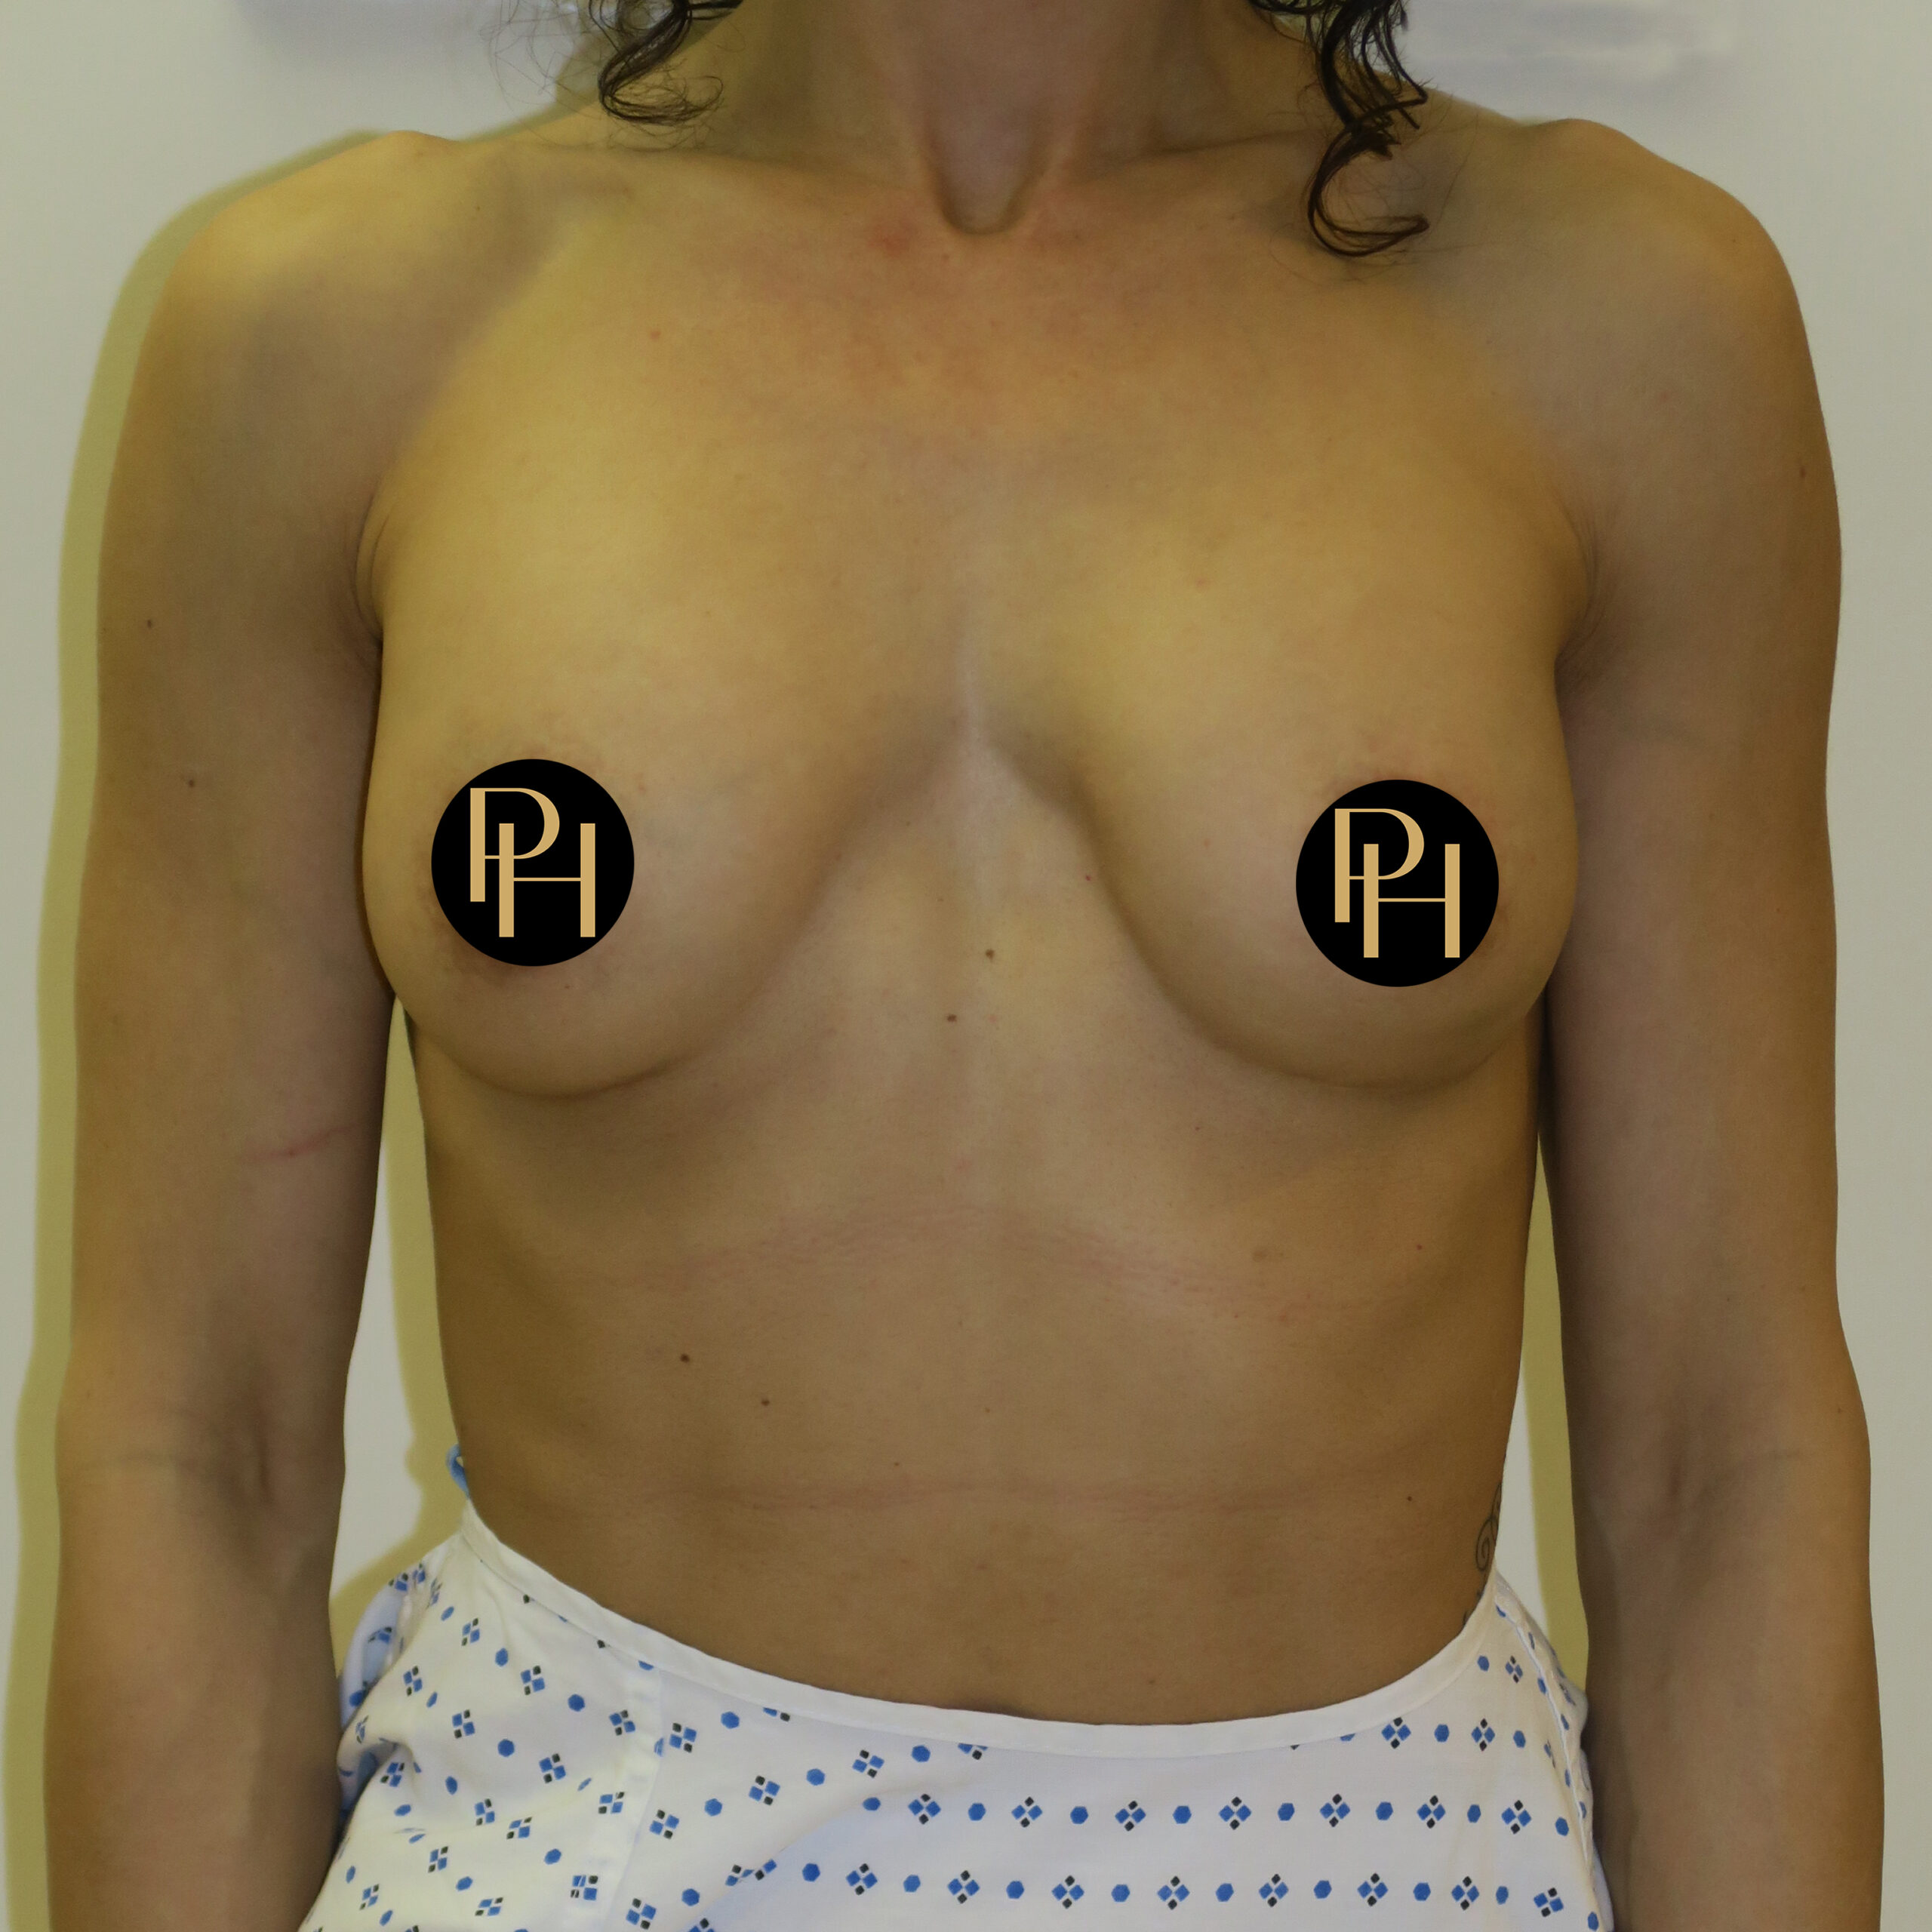 breast correction surgery